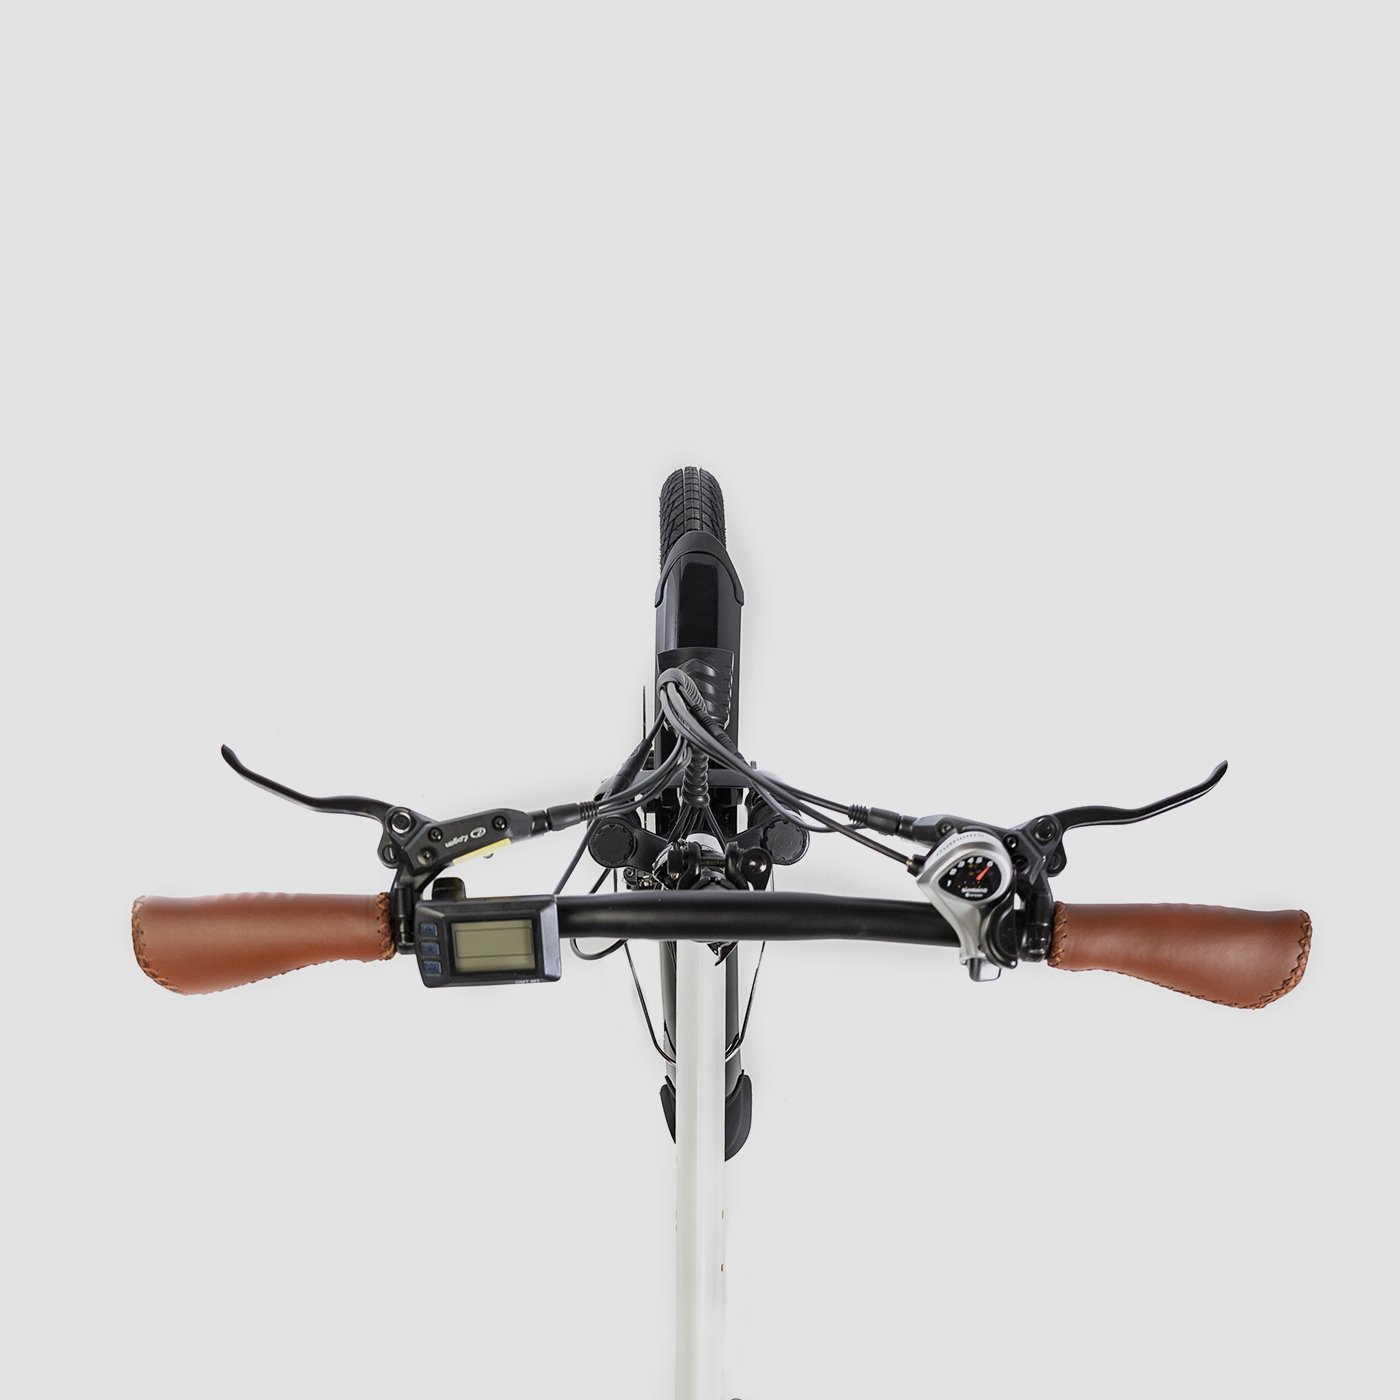 Bicicleta eléctrica plegable Biwbik Book Sport white